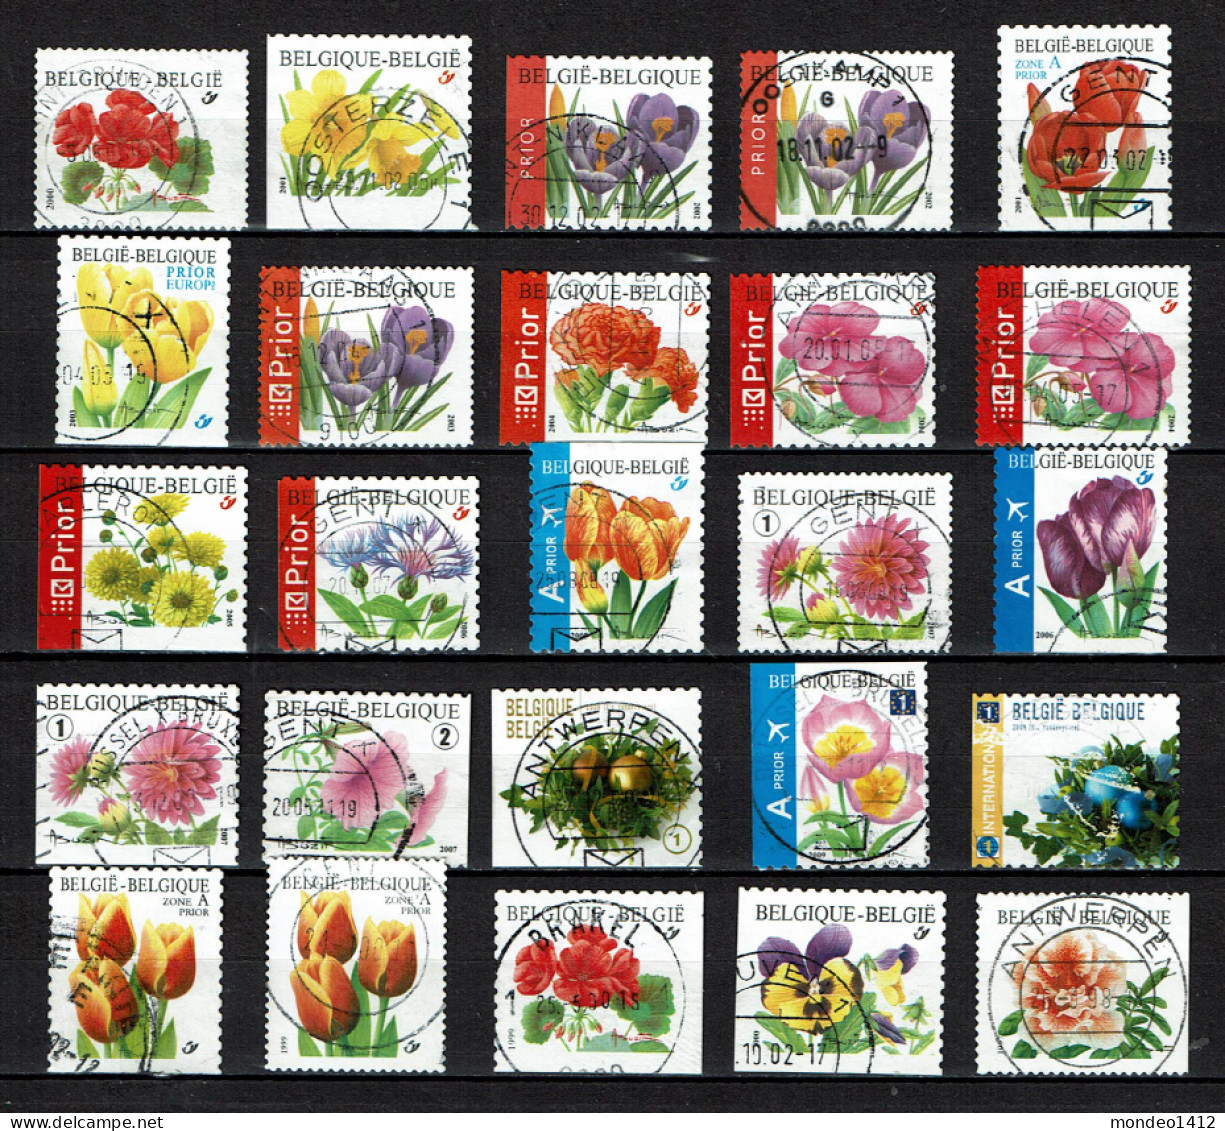 België - 02 - Bloemen, Fleurs, Flowers, Blumen - Sammlungen